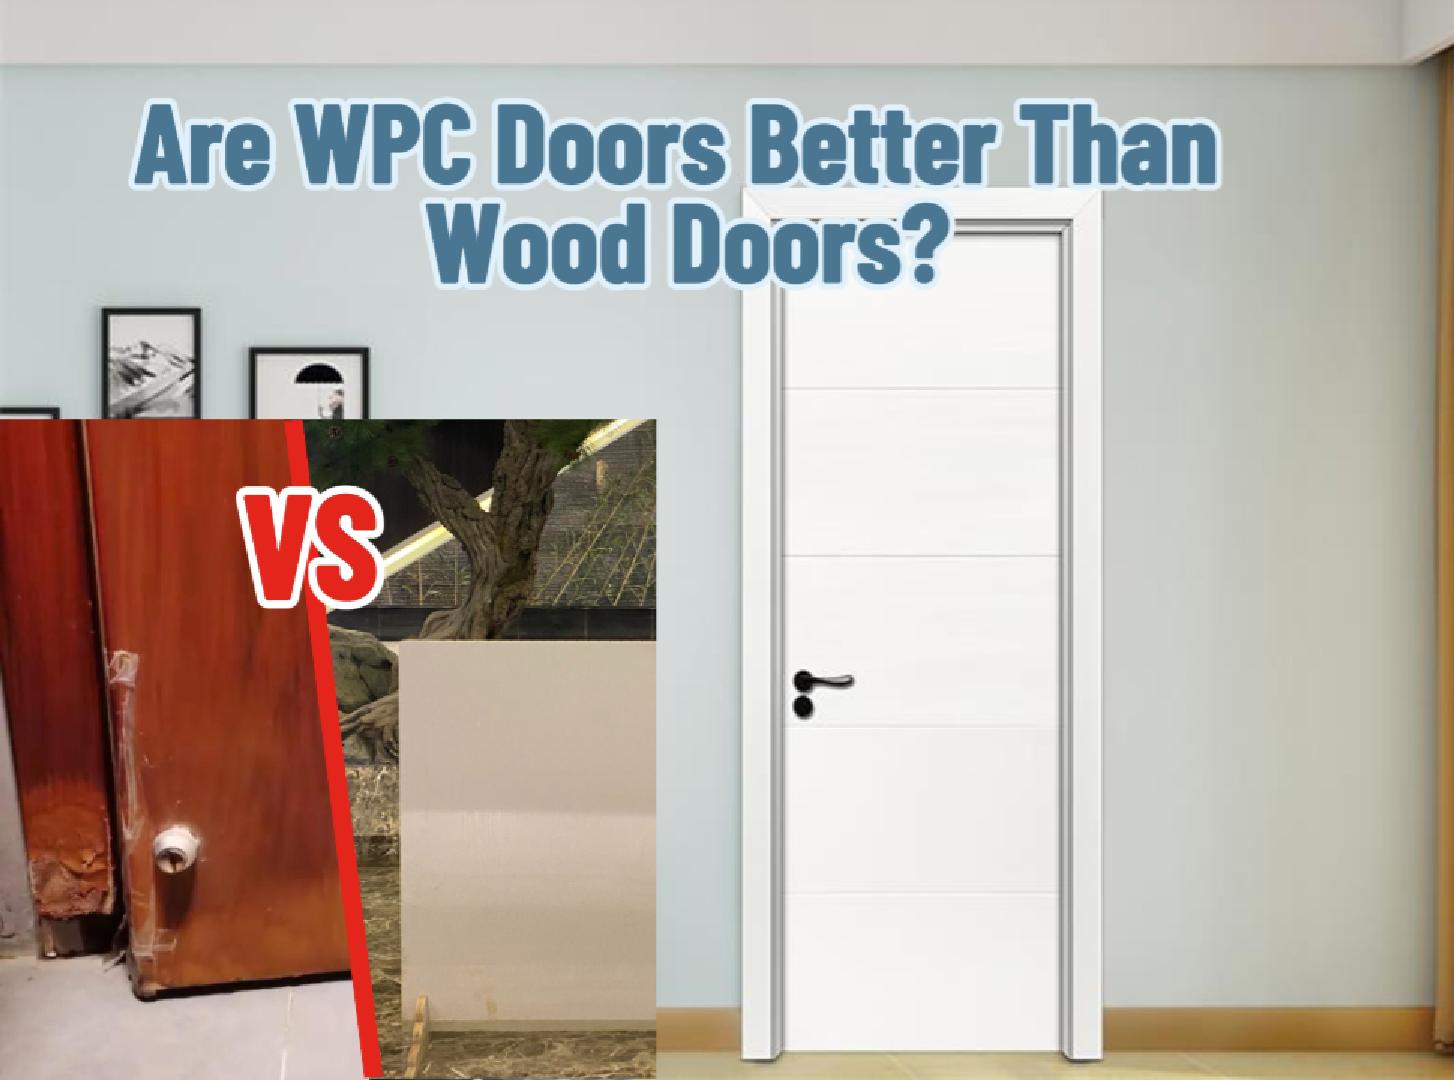 Are WPC Doors Better Than Wood Doors?